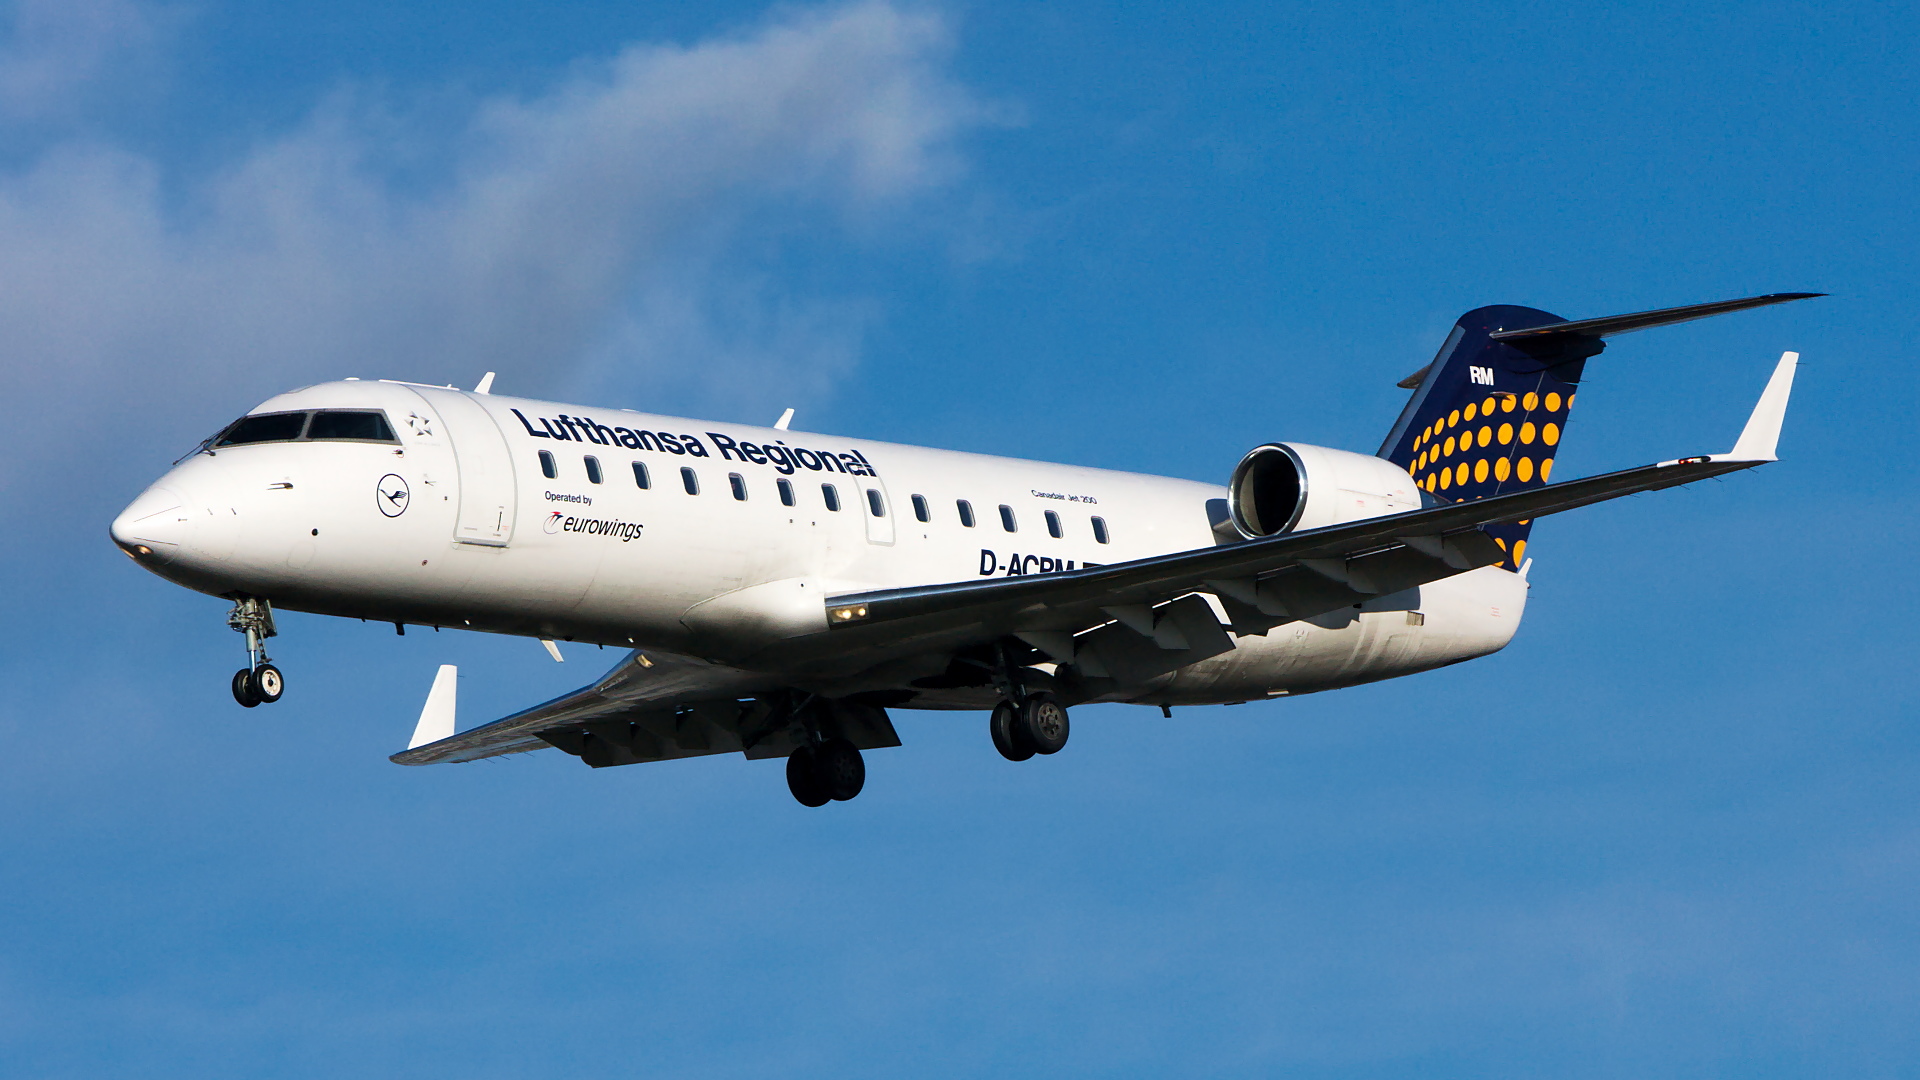 D-ACRM ✈ Lufthansa Regional Canadair CL-600-2B19 CRJ-200LR @ London-Heathrow